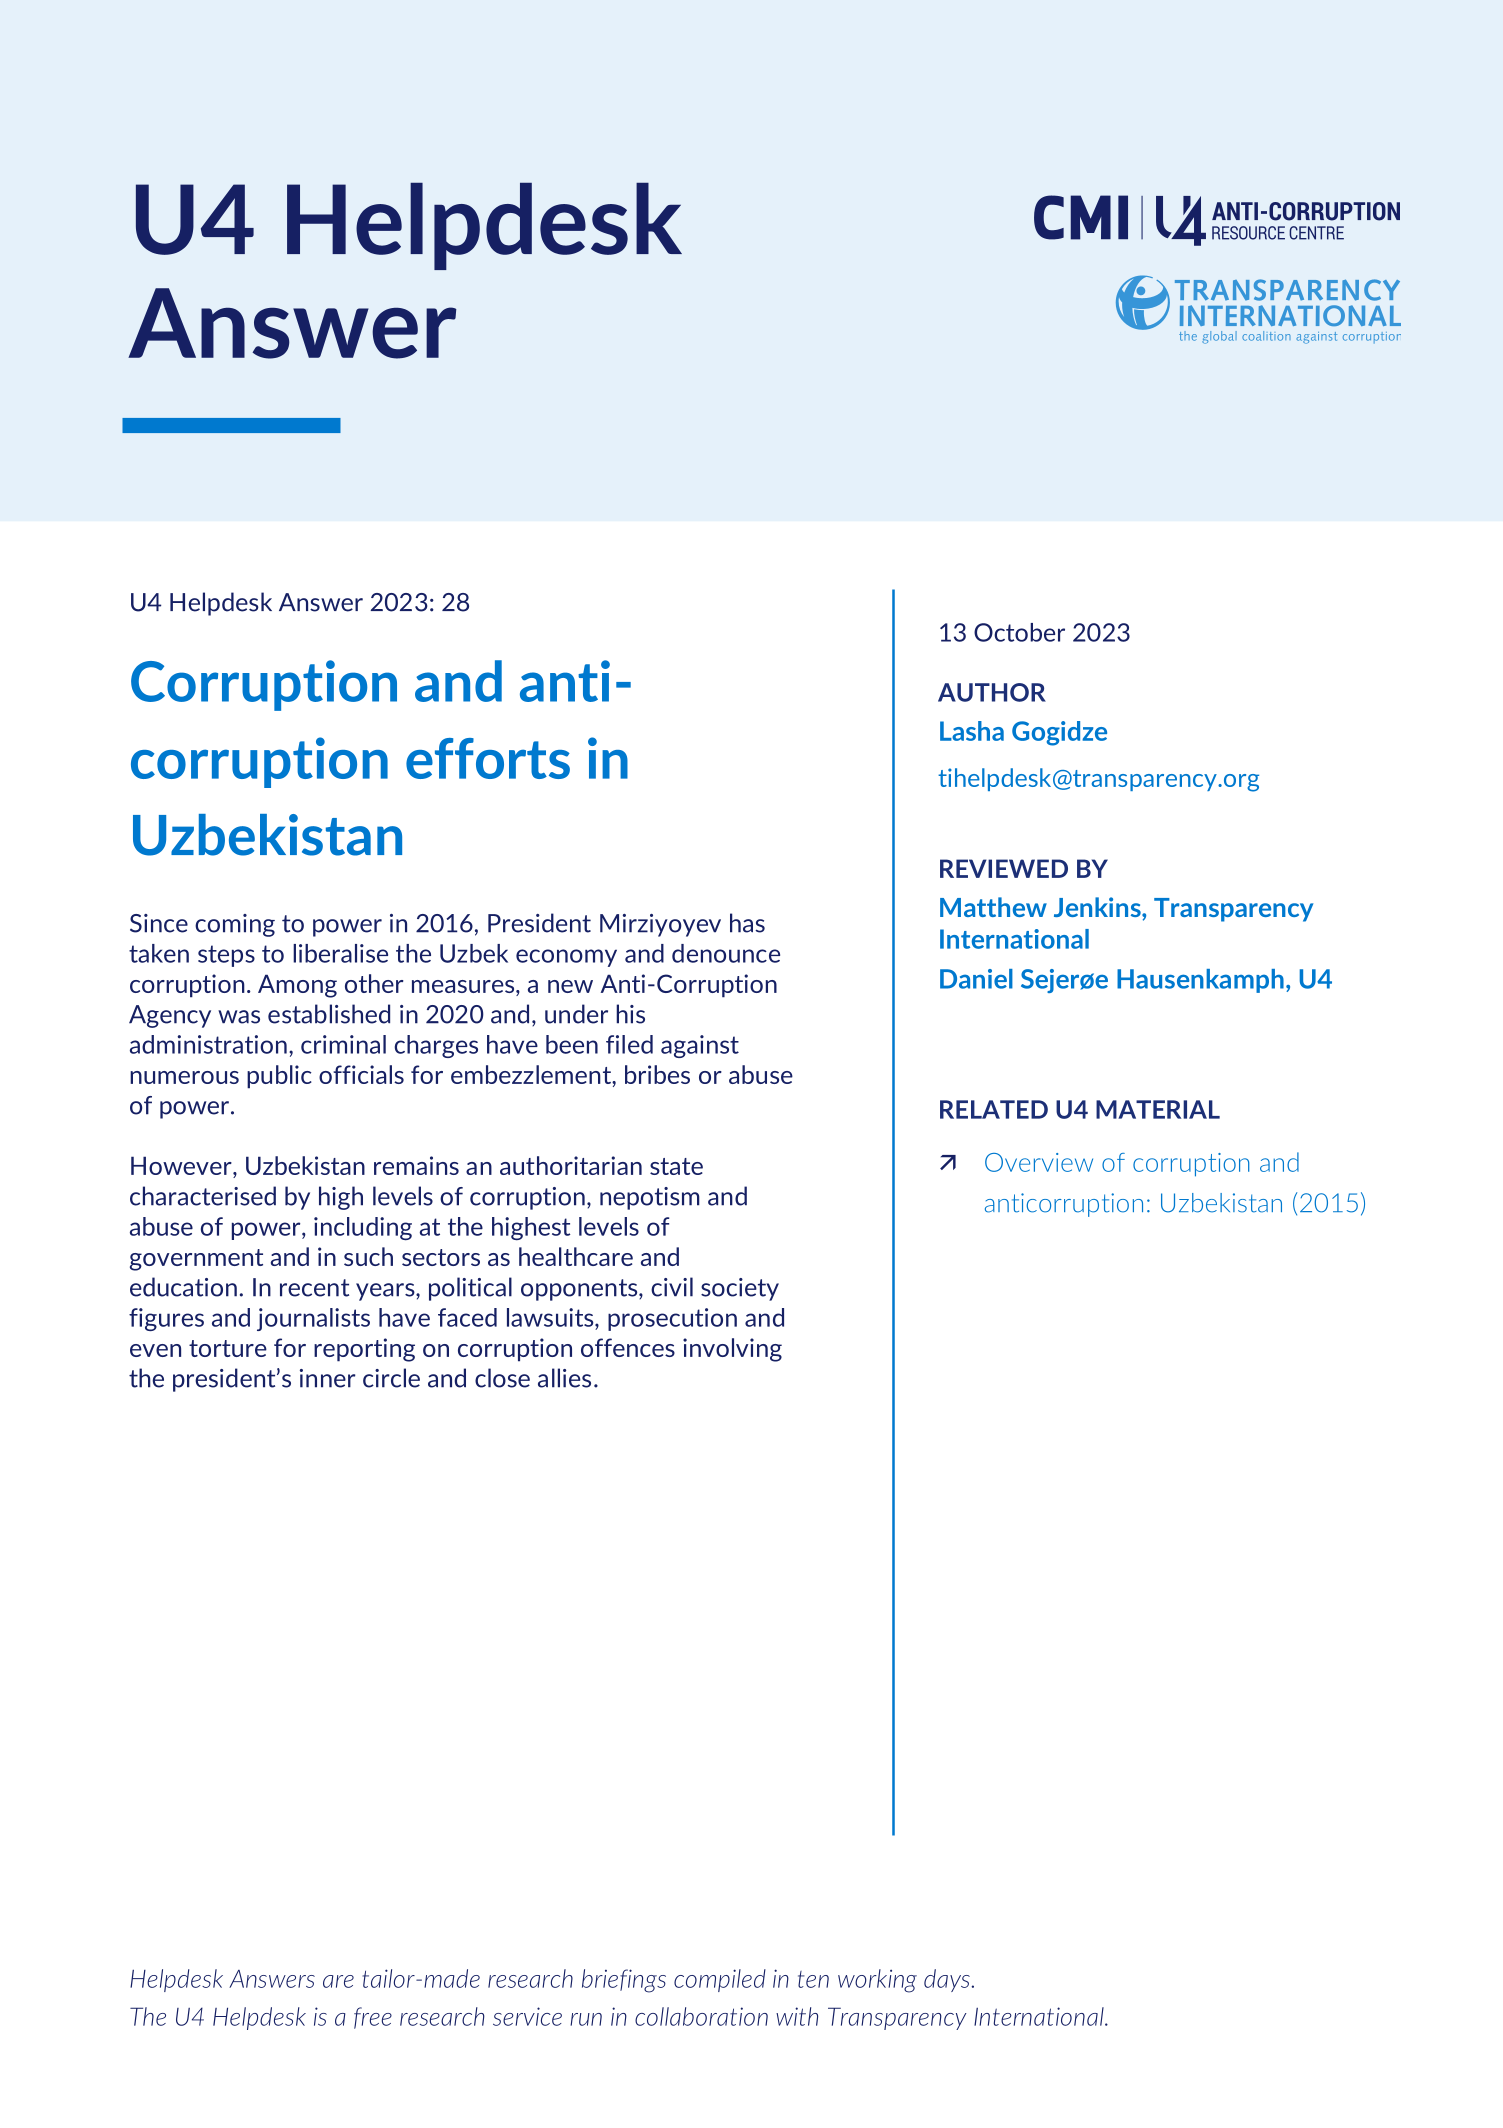 Uzbekistan: Corruption and anti-corruption